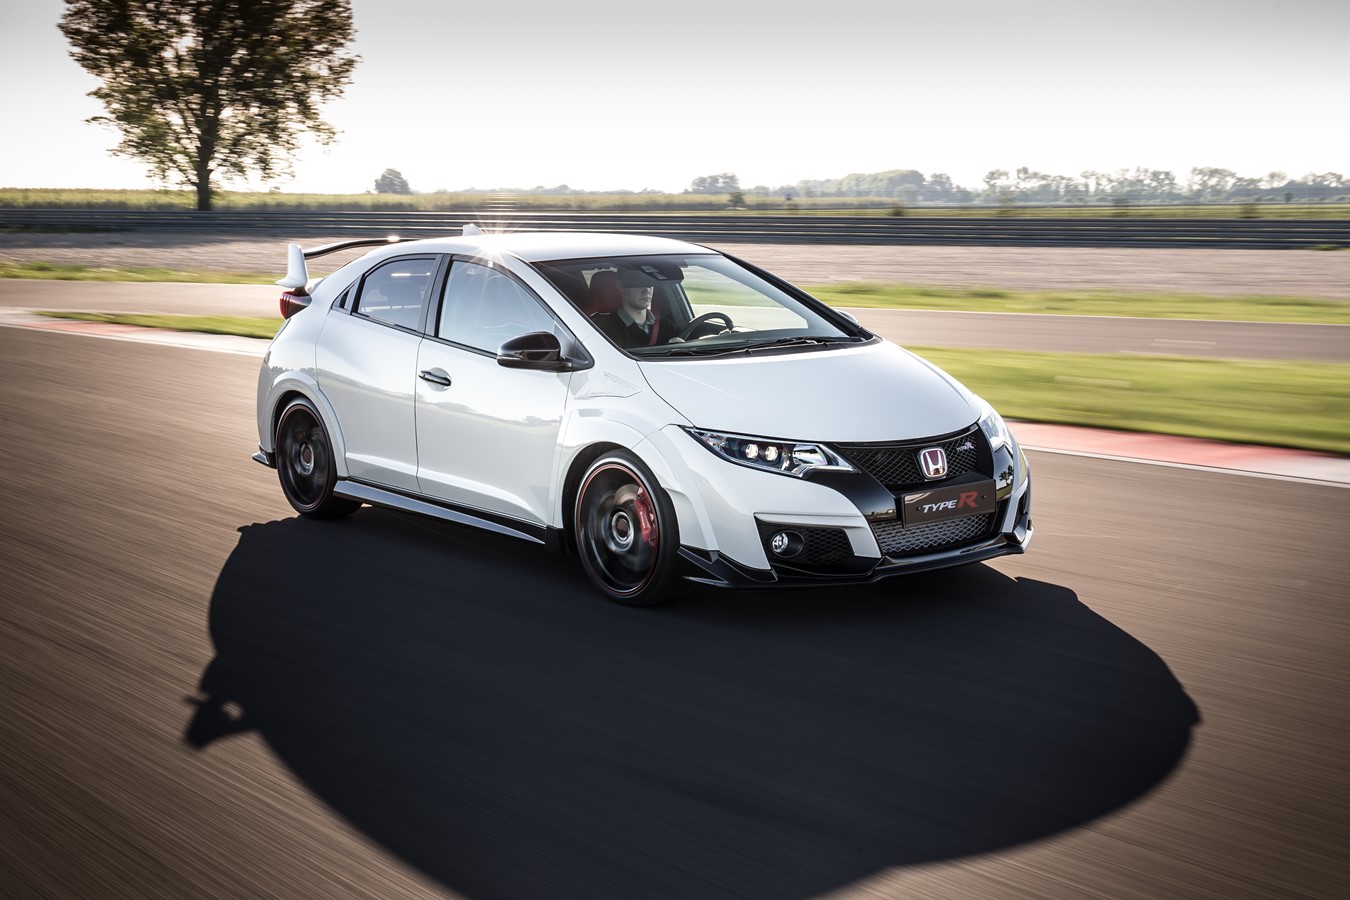 Honda’s new CEO Announces British-built Civic Type R destined for Japan